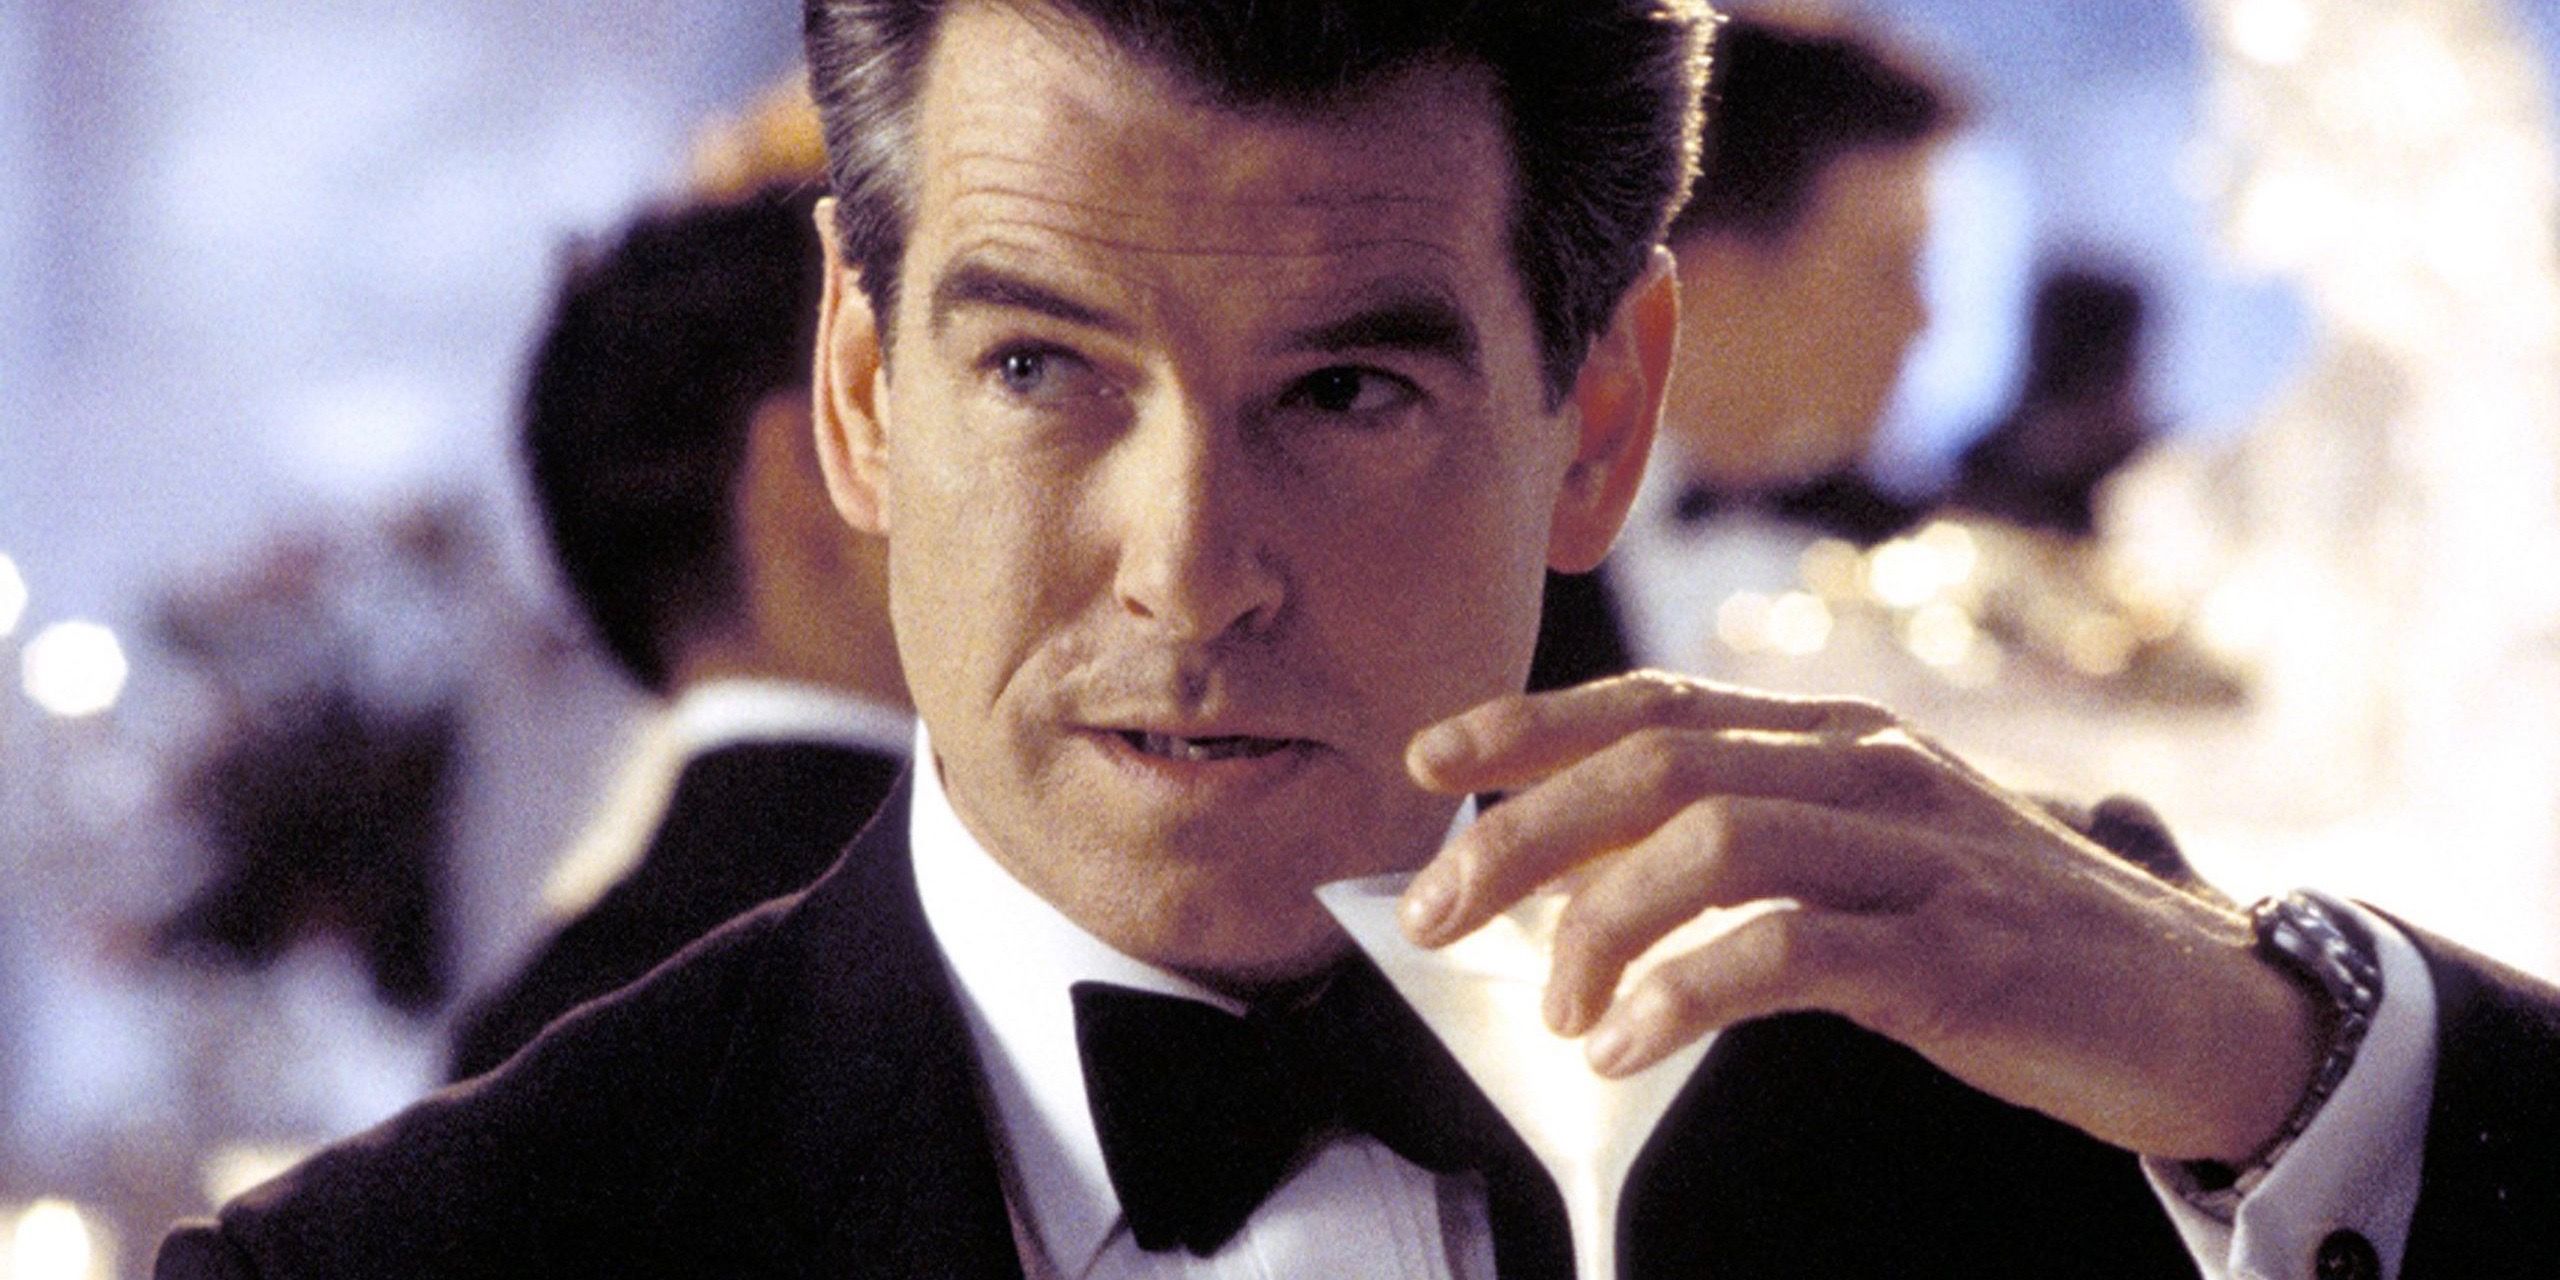 Pierce Brosnan as James Bond 007 in Die Another Day